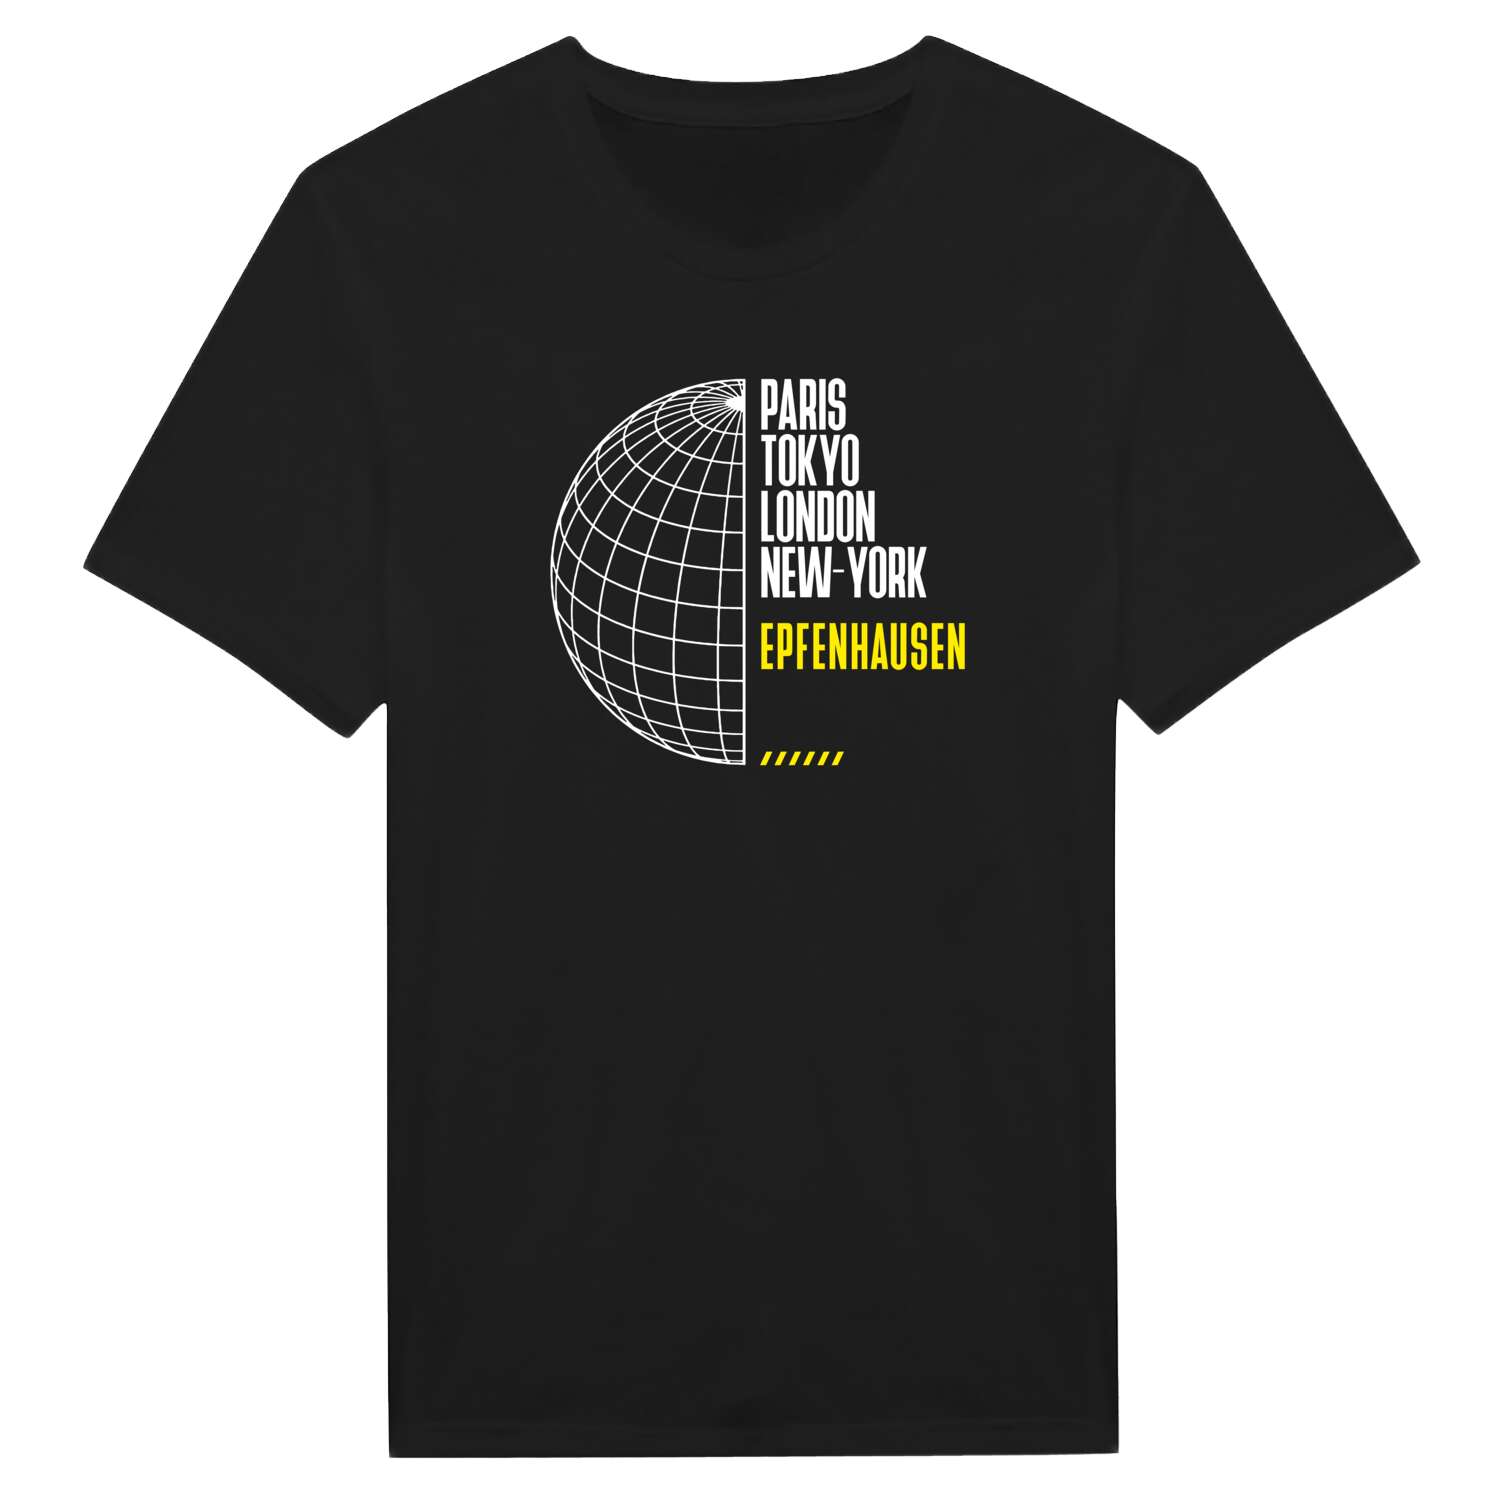 Epfenhausen T-Shirt »Paris Tokyo London«